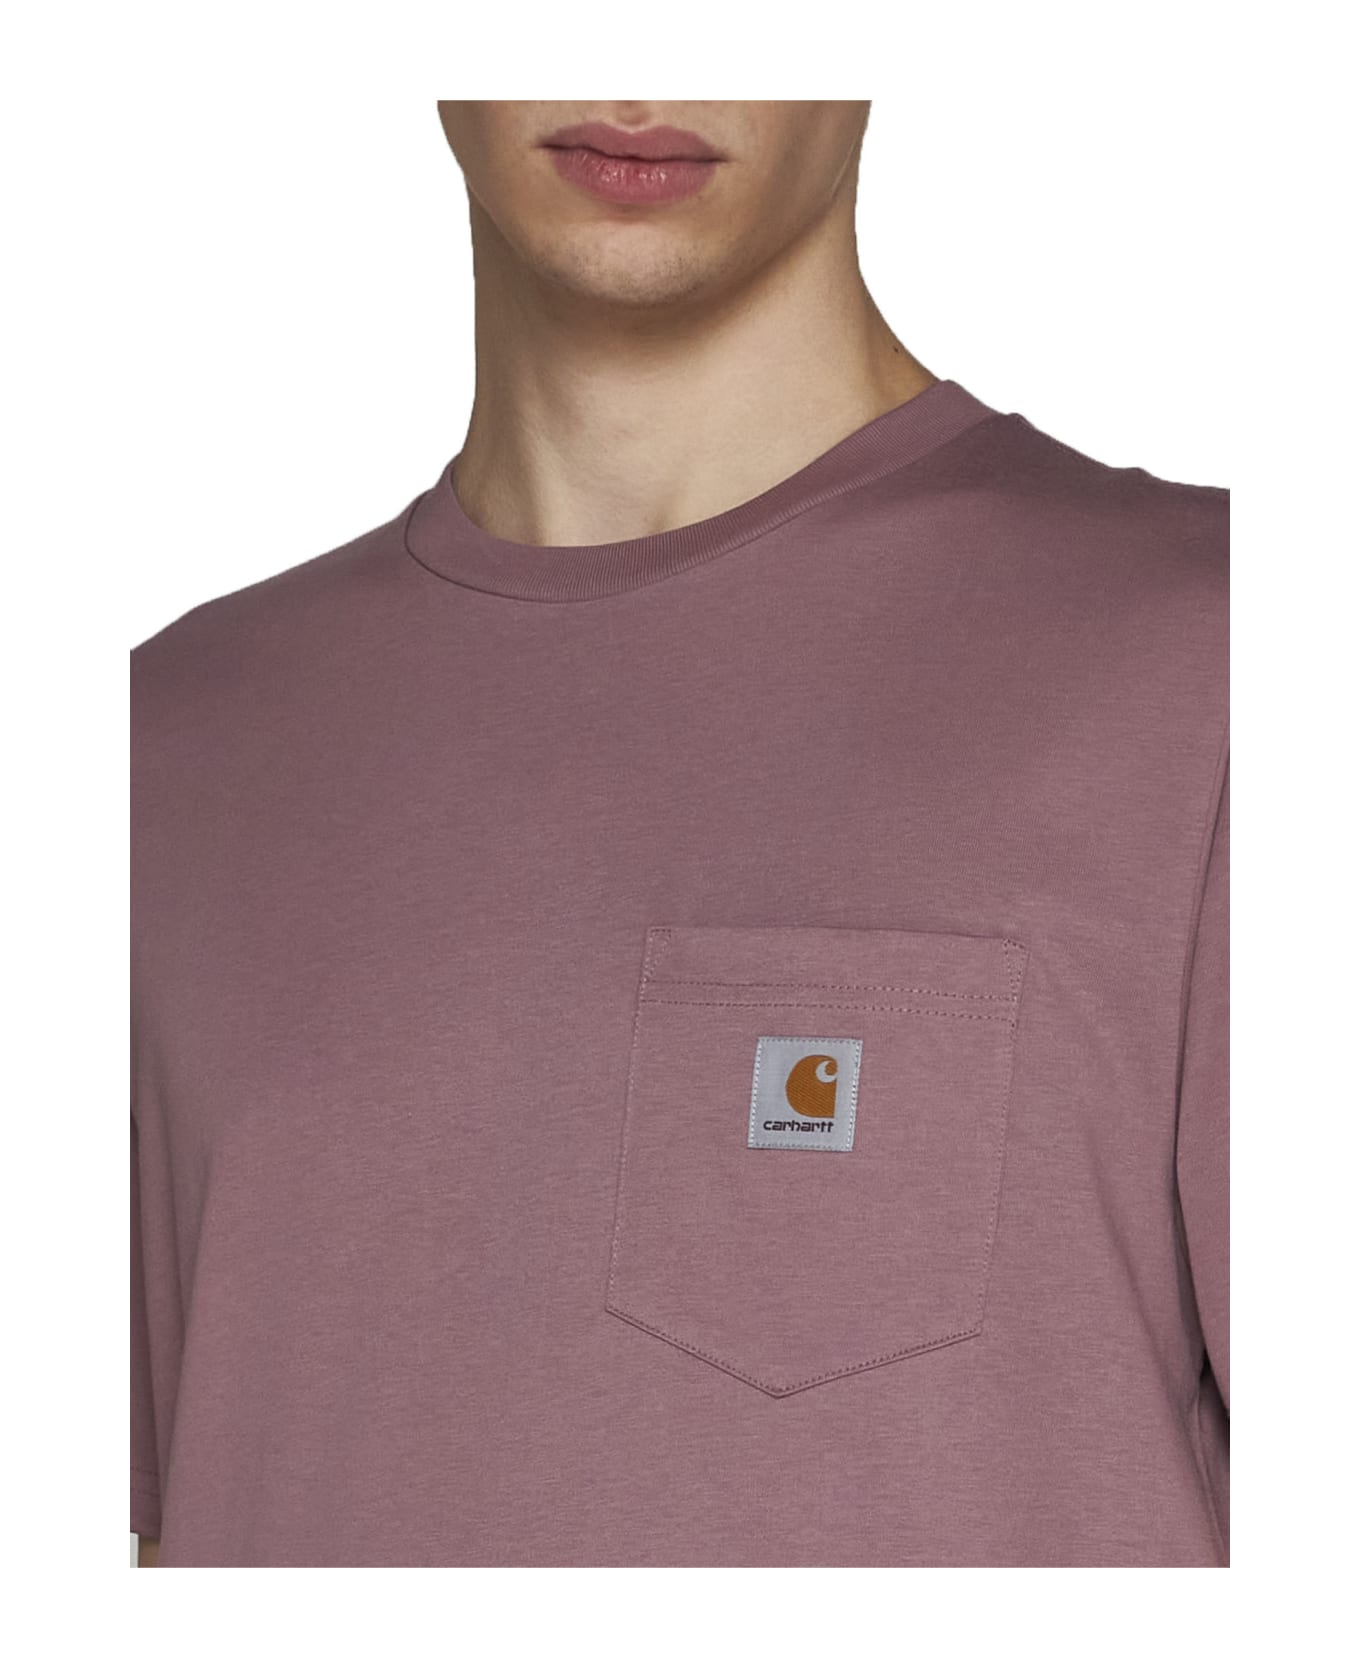 Carhartt T-shirt With Pocket - SABLEBLK